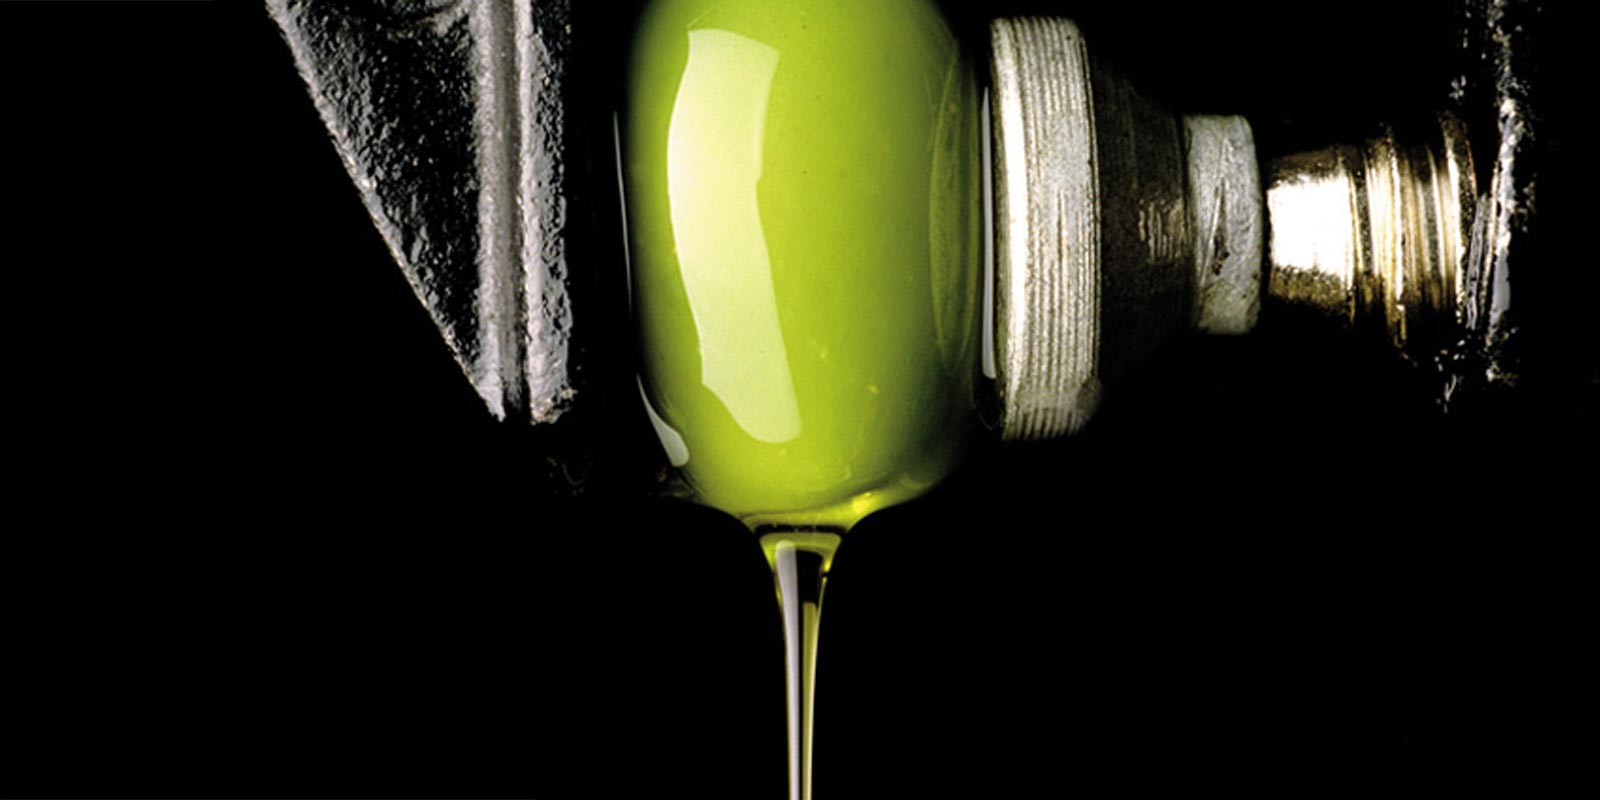 Oleje z Abruzza / Italie od Ursini Giuseppe Ursini je clenem exkluzivniho sdruzeni Mastri Oleari, italskych odborniku na olivovy olej. Jeho kredo: jen velmi dobre udrzovane olivove haje produkuji plody, ze kterych lze vyrobit opravdu kvalitni olivovy olej. Takto zachazi se svymi vlastnimi haji a take v tomto ohledu radi pestitelum oliv ve sve oblasti. Je farmar, krajinar, olejovy mlynar, nakupci a zpracovatel v jednom.